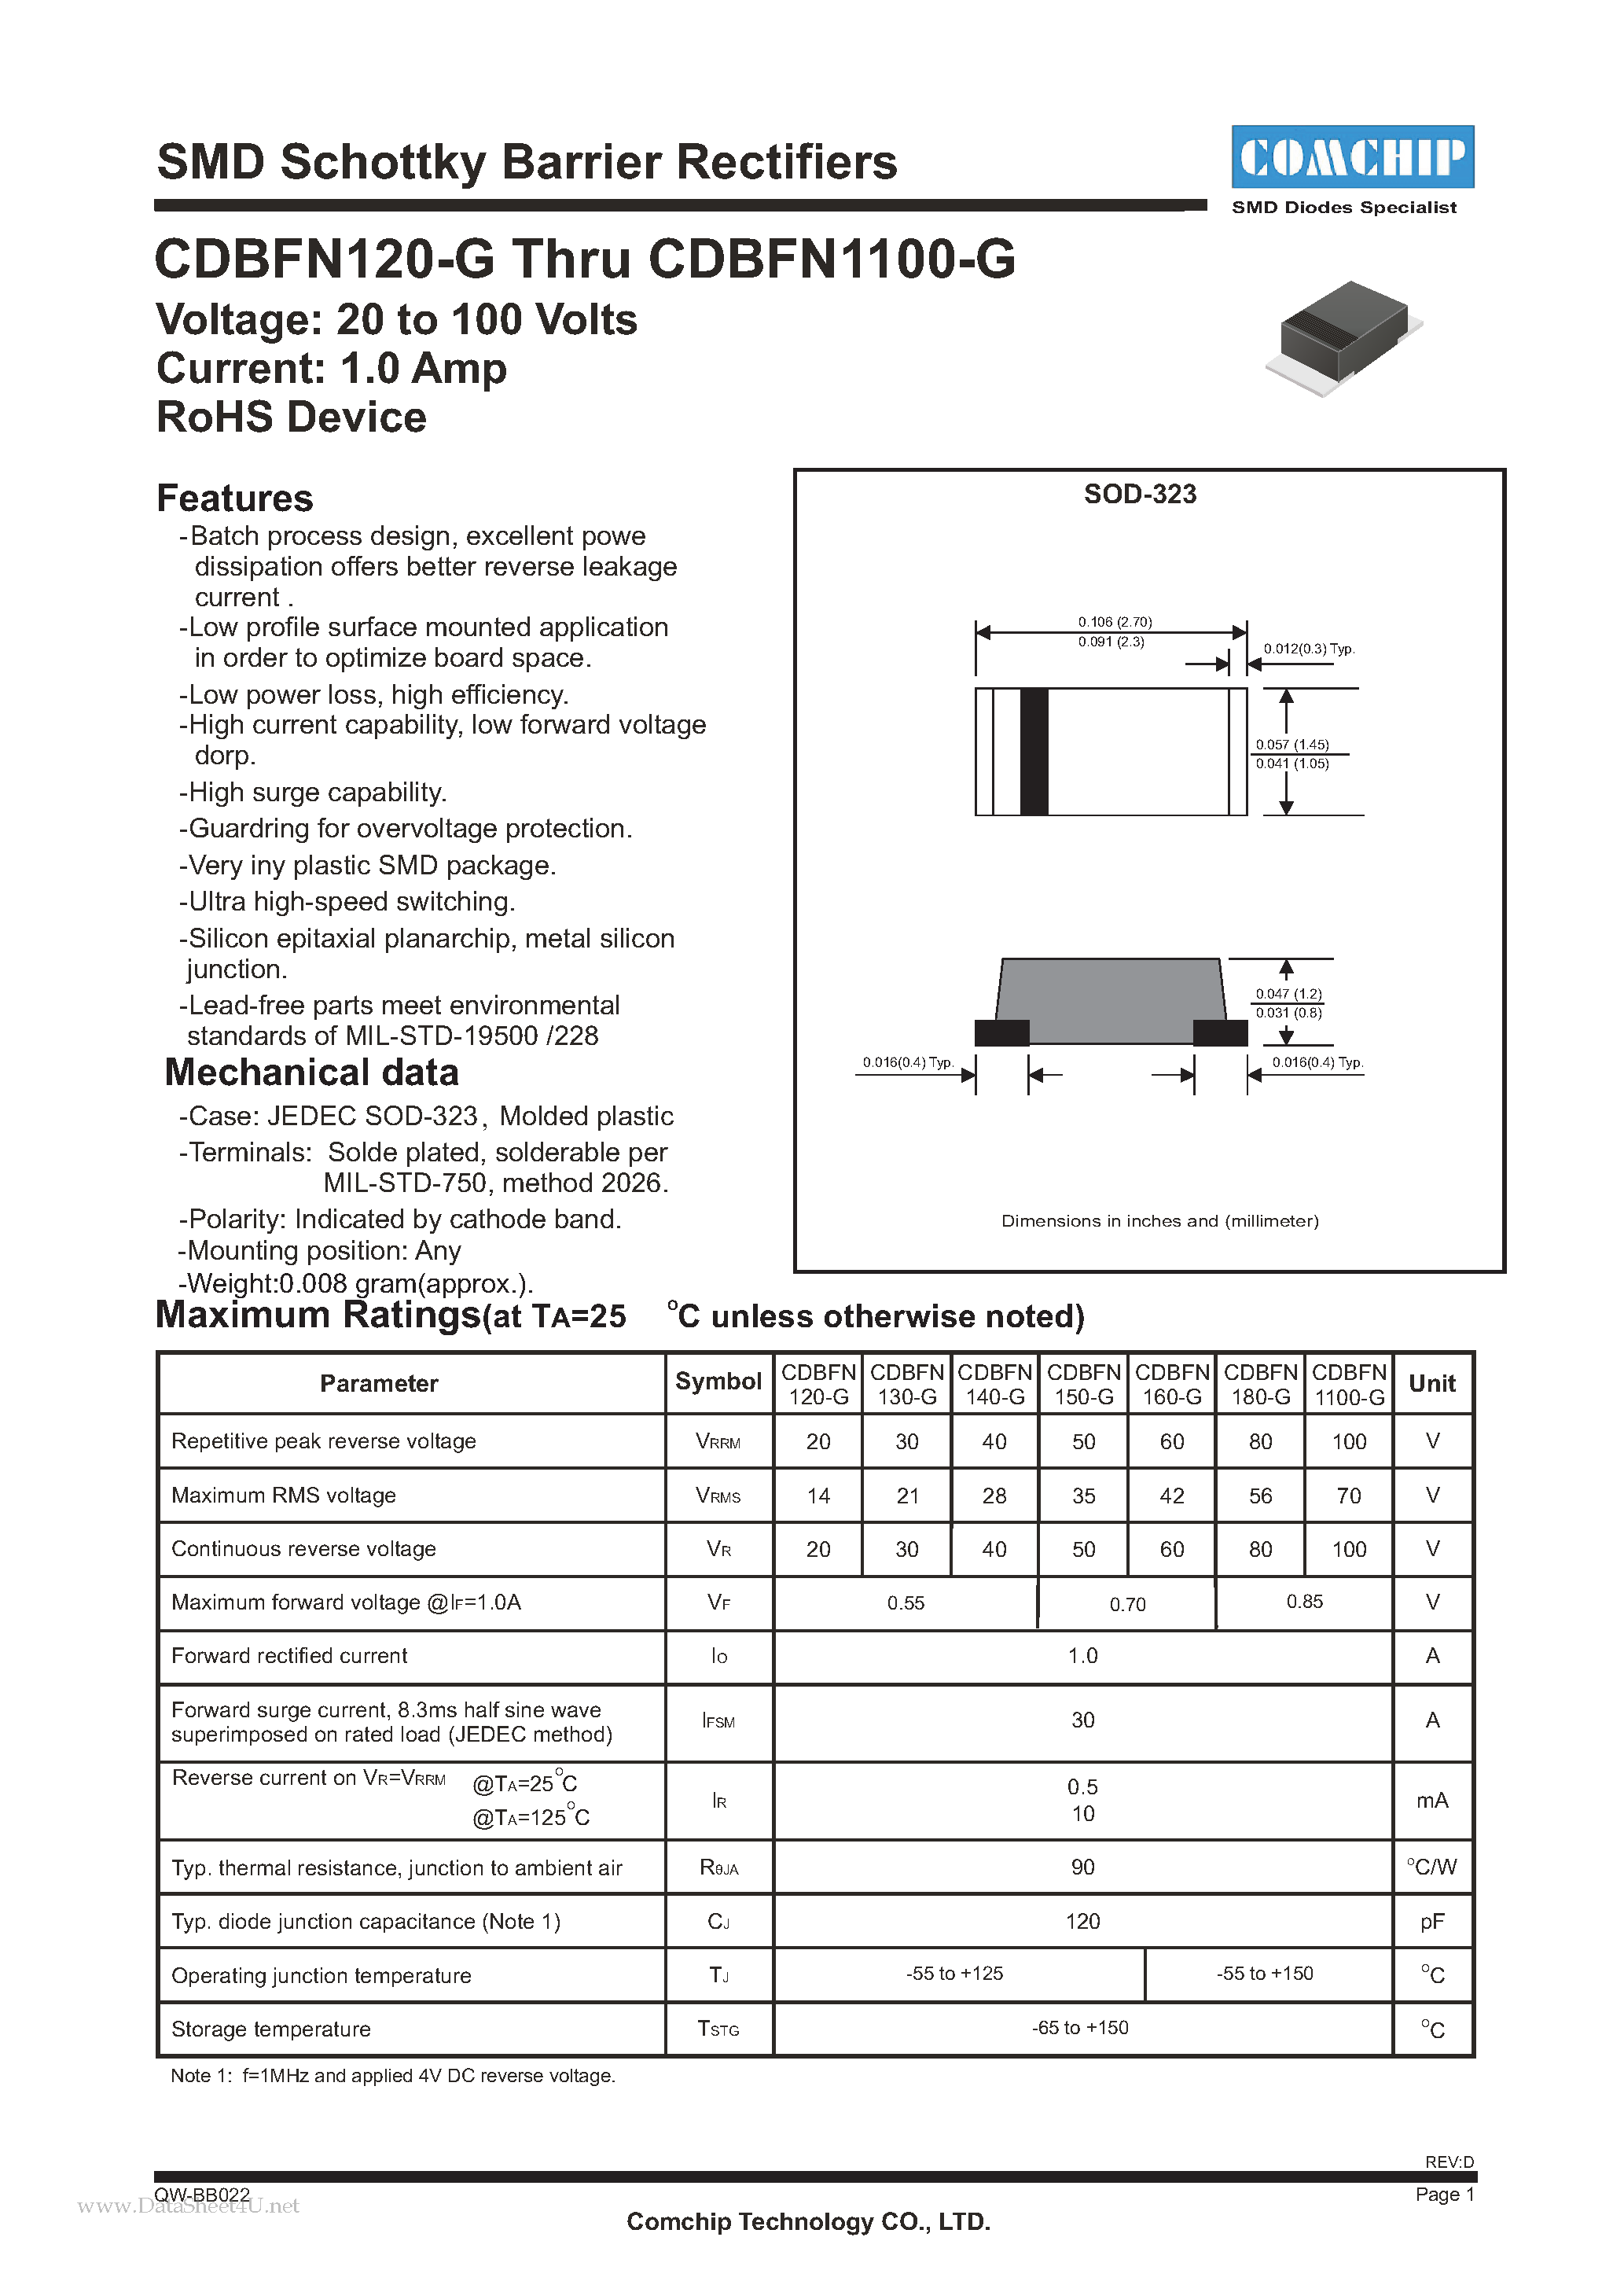 Datasheet CDBFN1100-G - (CDBFN120-G - CDBFN1100-G) SMD Schottky Barrier Rectifiers page 1